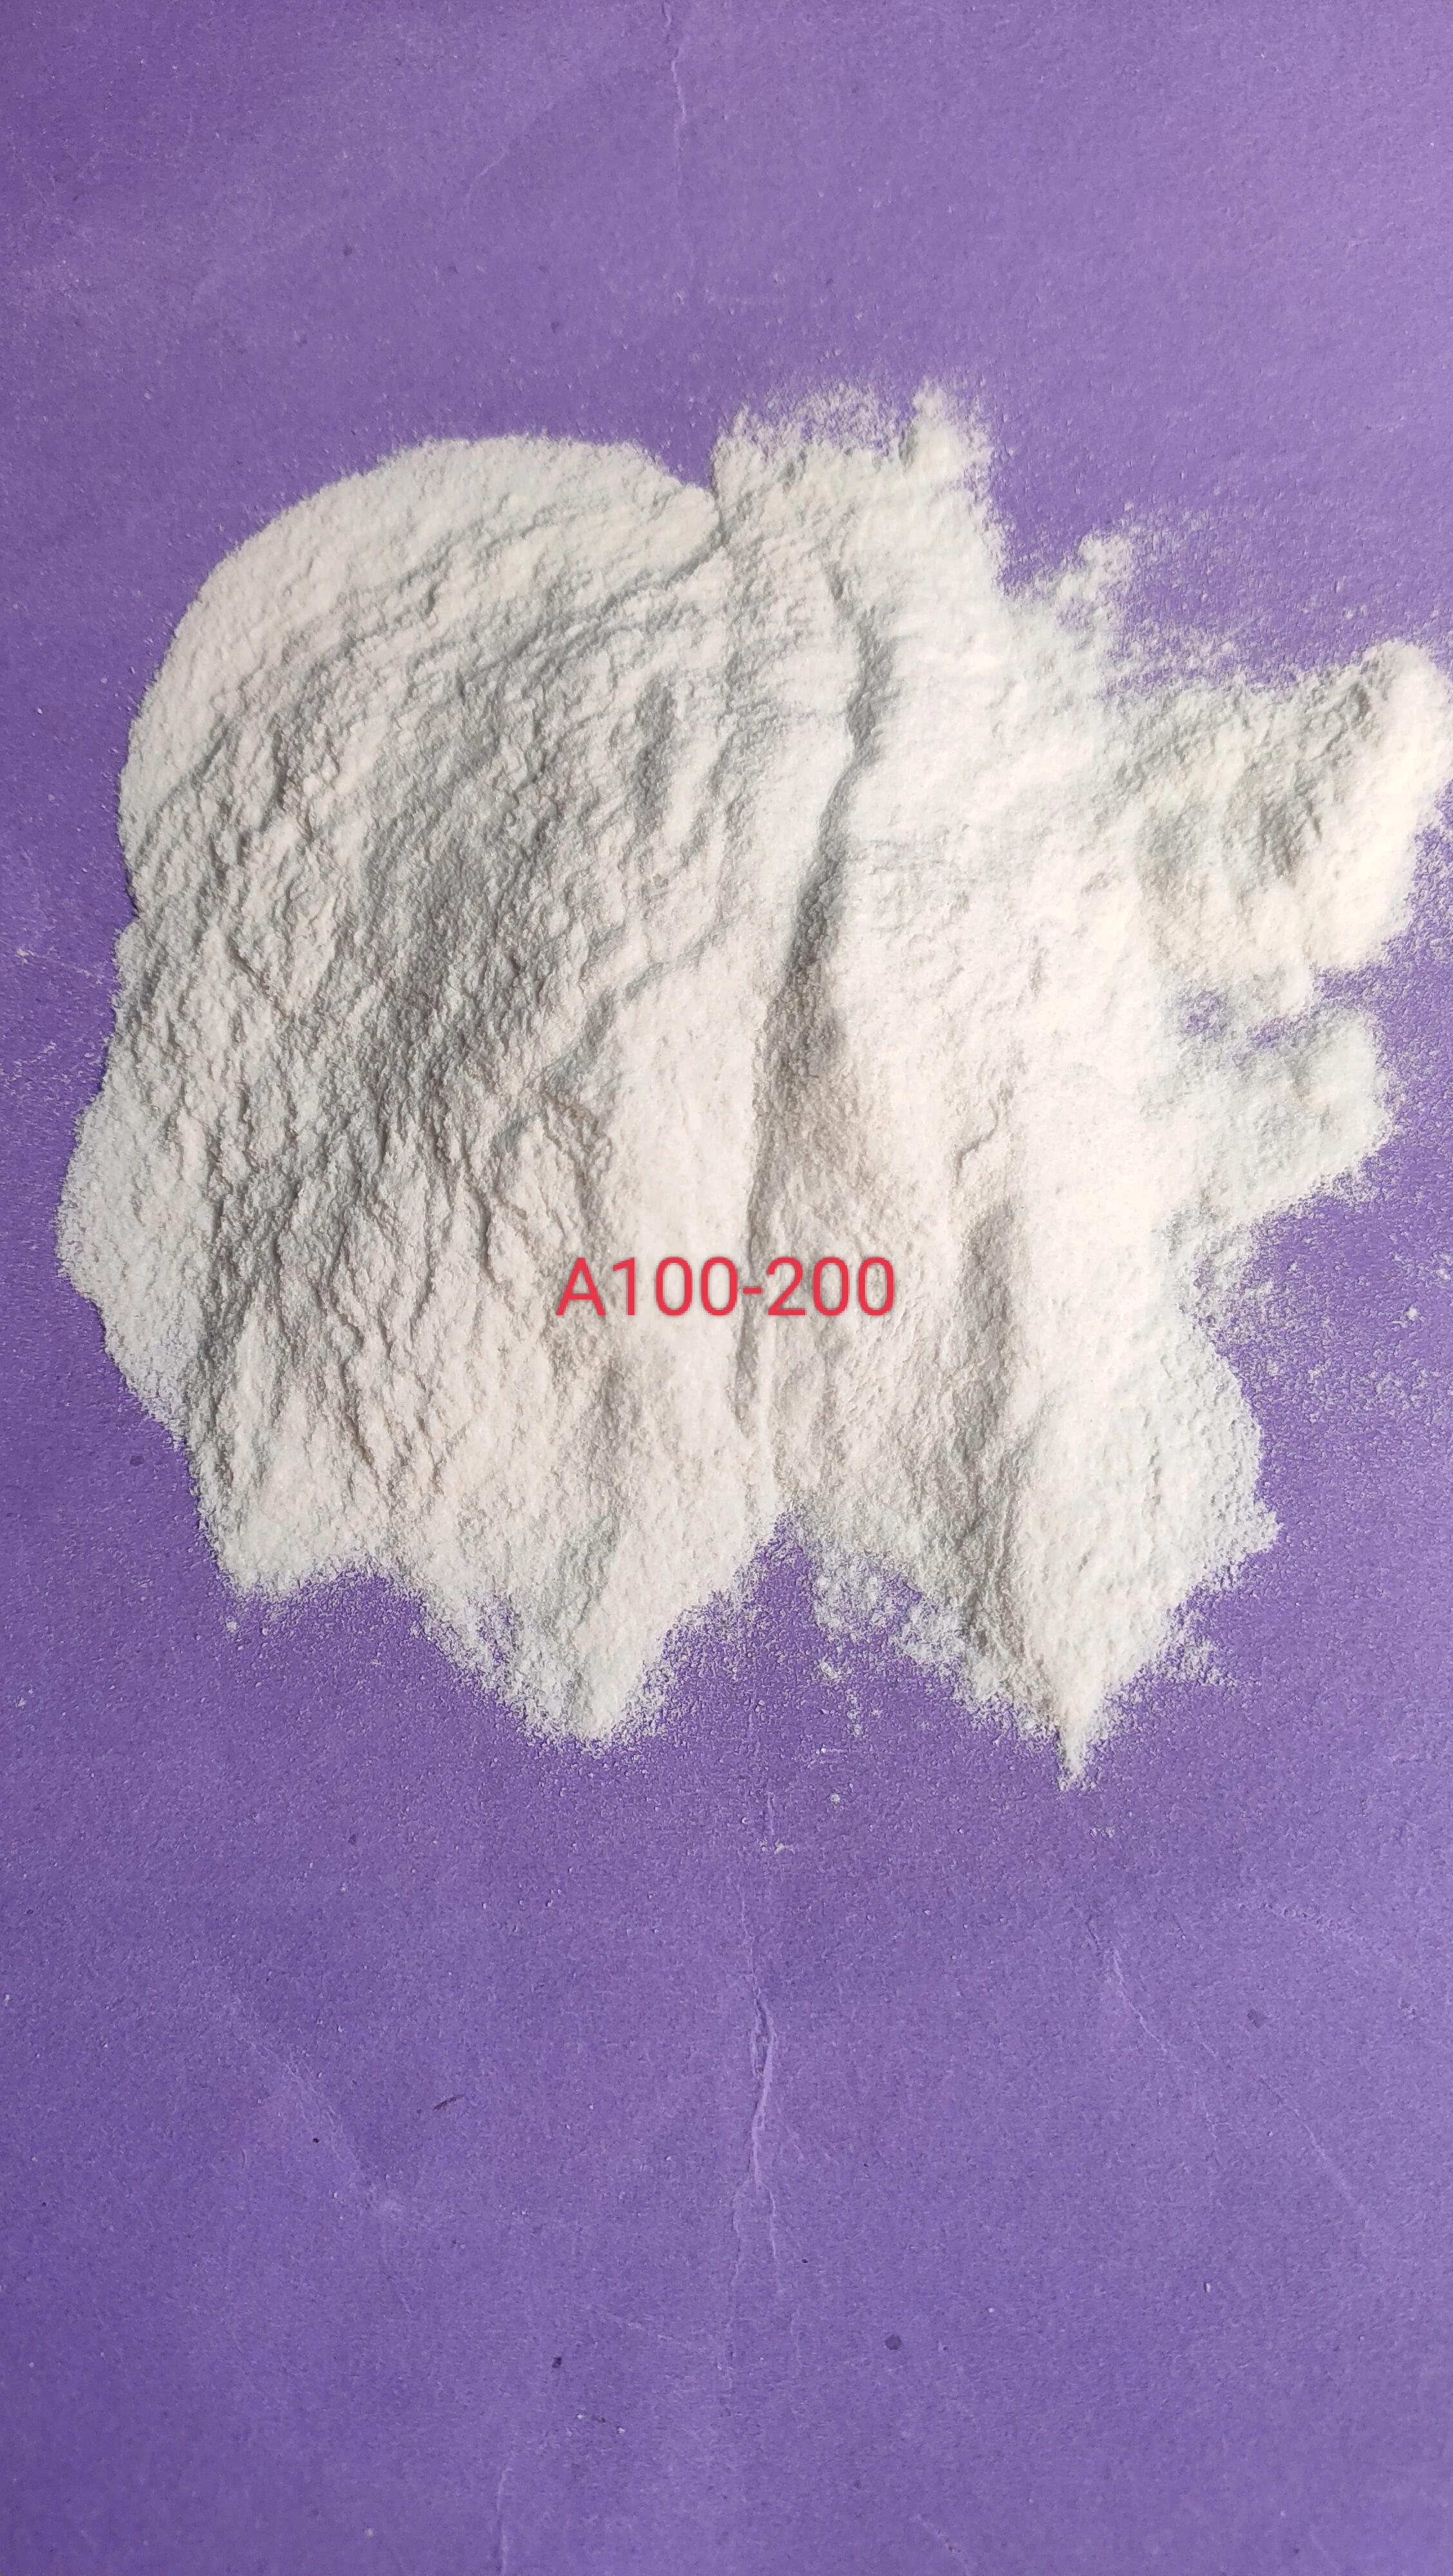 High purity 99.9% quartz powder silica powder 100-200 mesh for glass industry